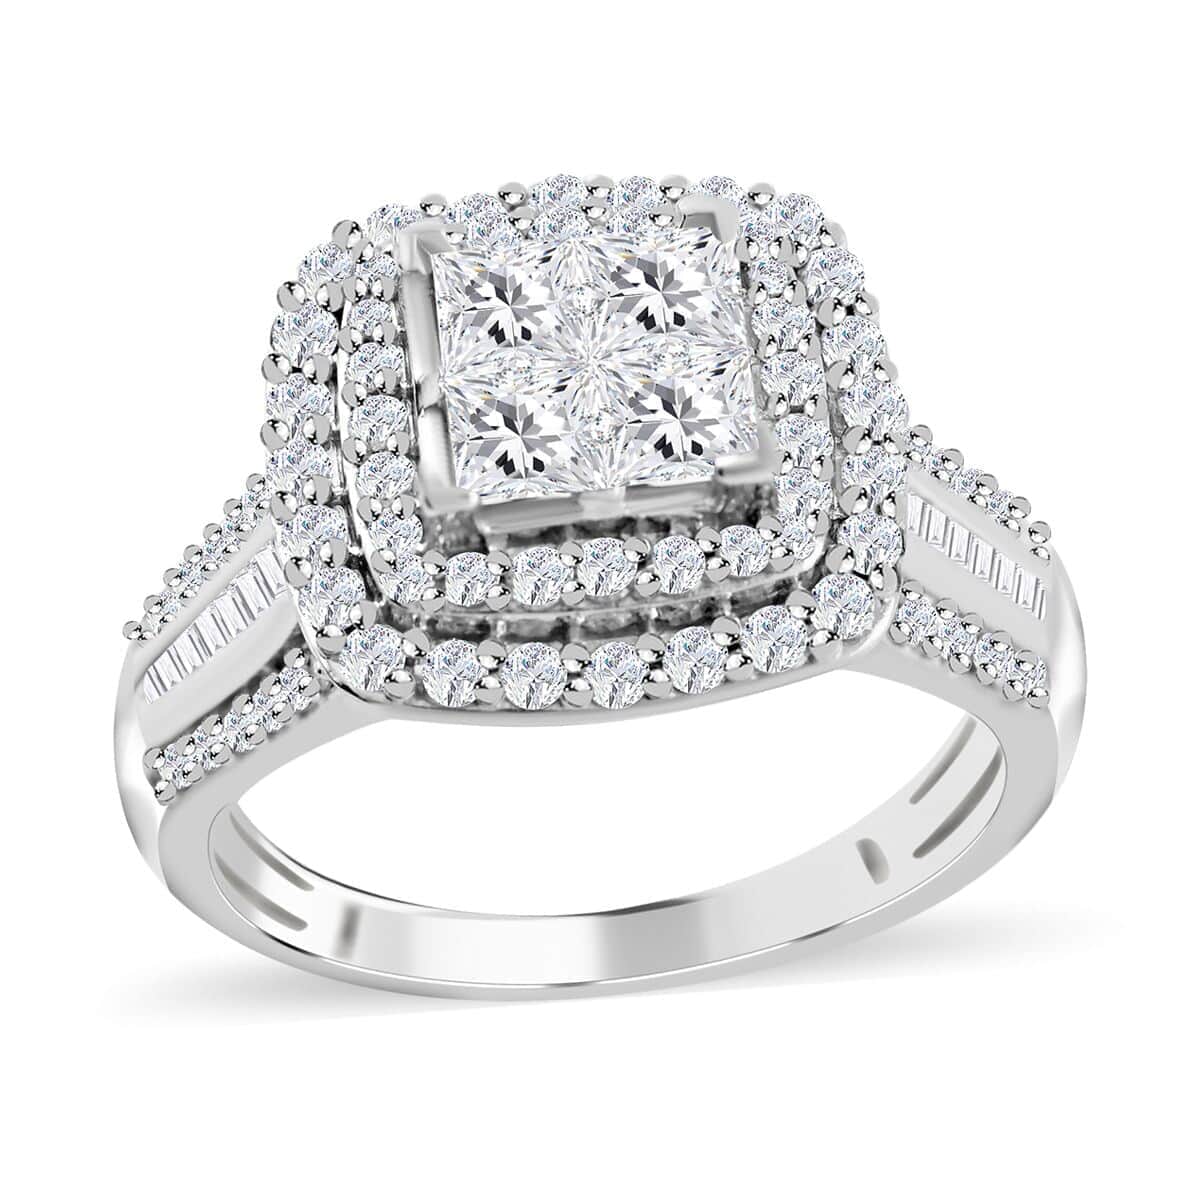 NY Closeout 10K White Gold Diamond Ring (Size 7.0) 5.70 Grams 1.75 ctw